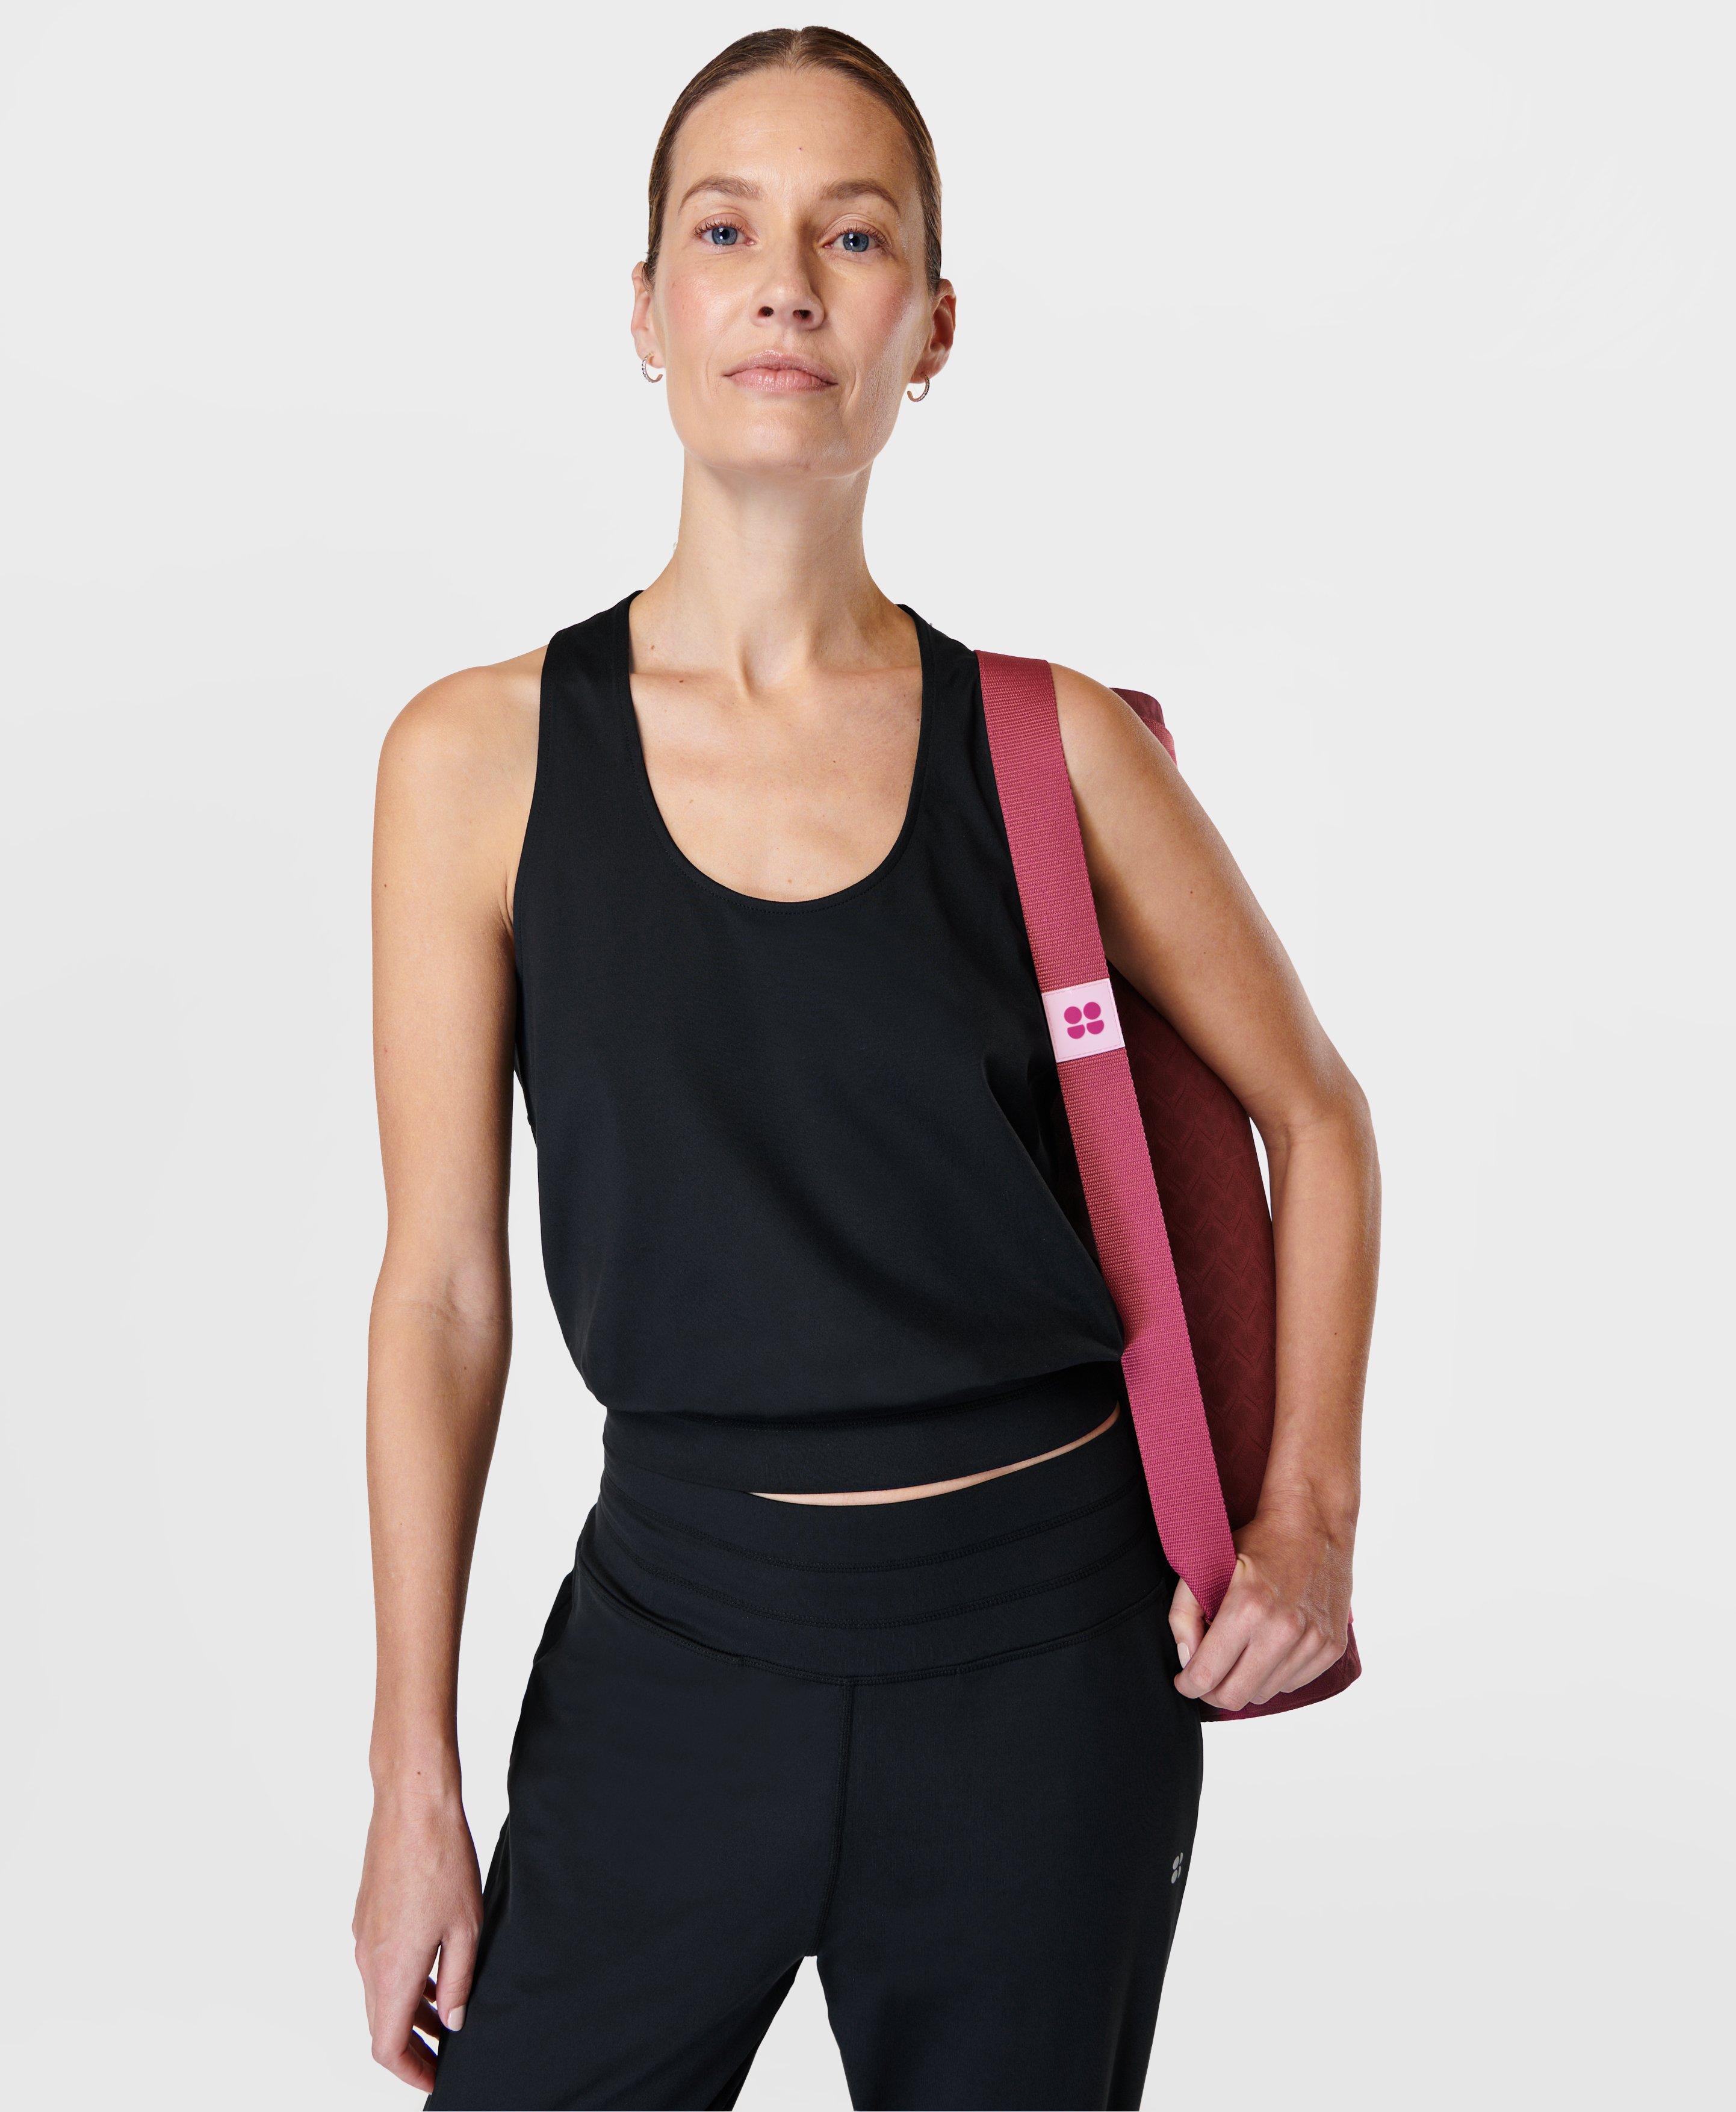 GWAABD Elastic Tank Top Yoga Tops Women Sportswear Vest Fitness tight  Sleeveless Running shirt 